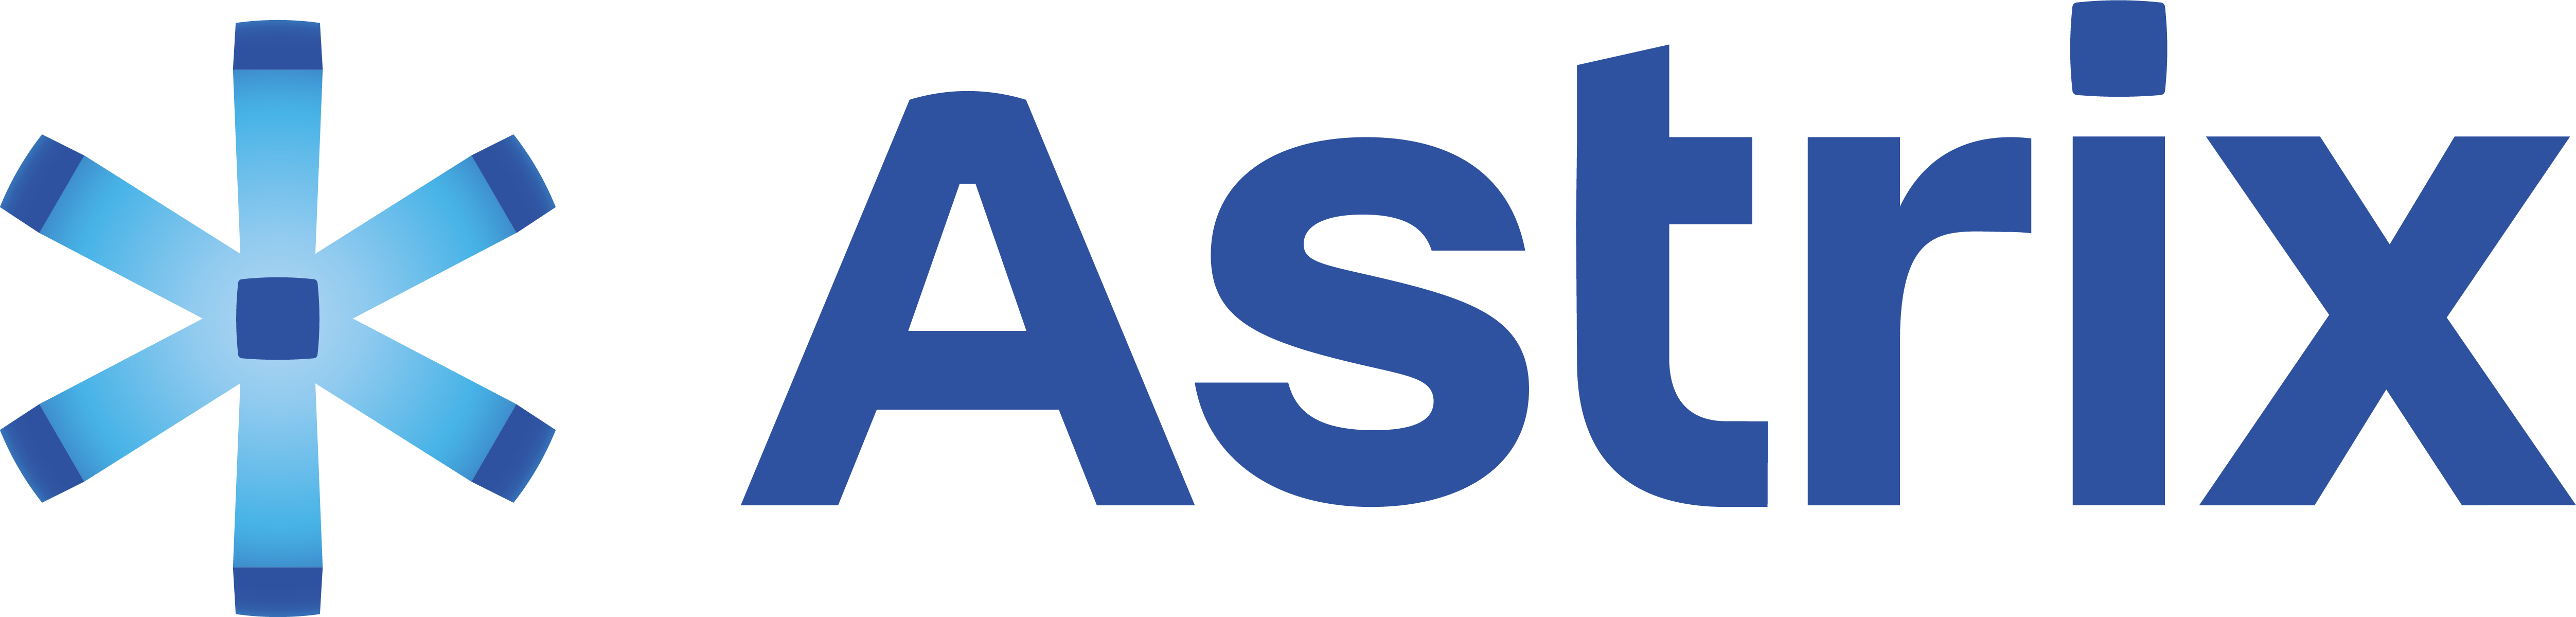 astrix-logo